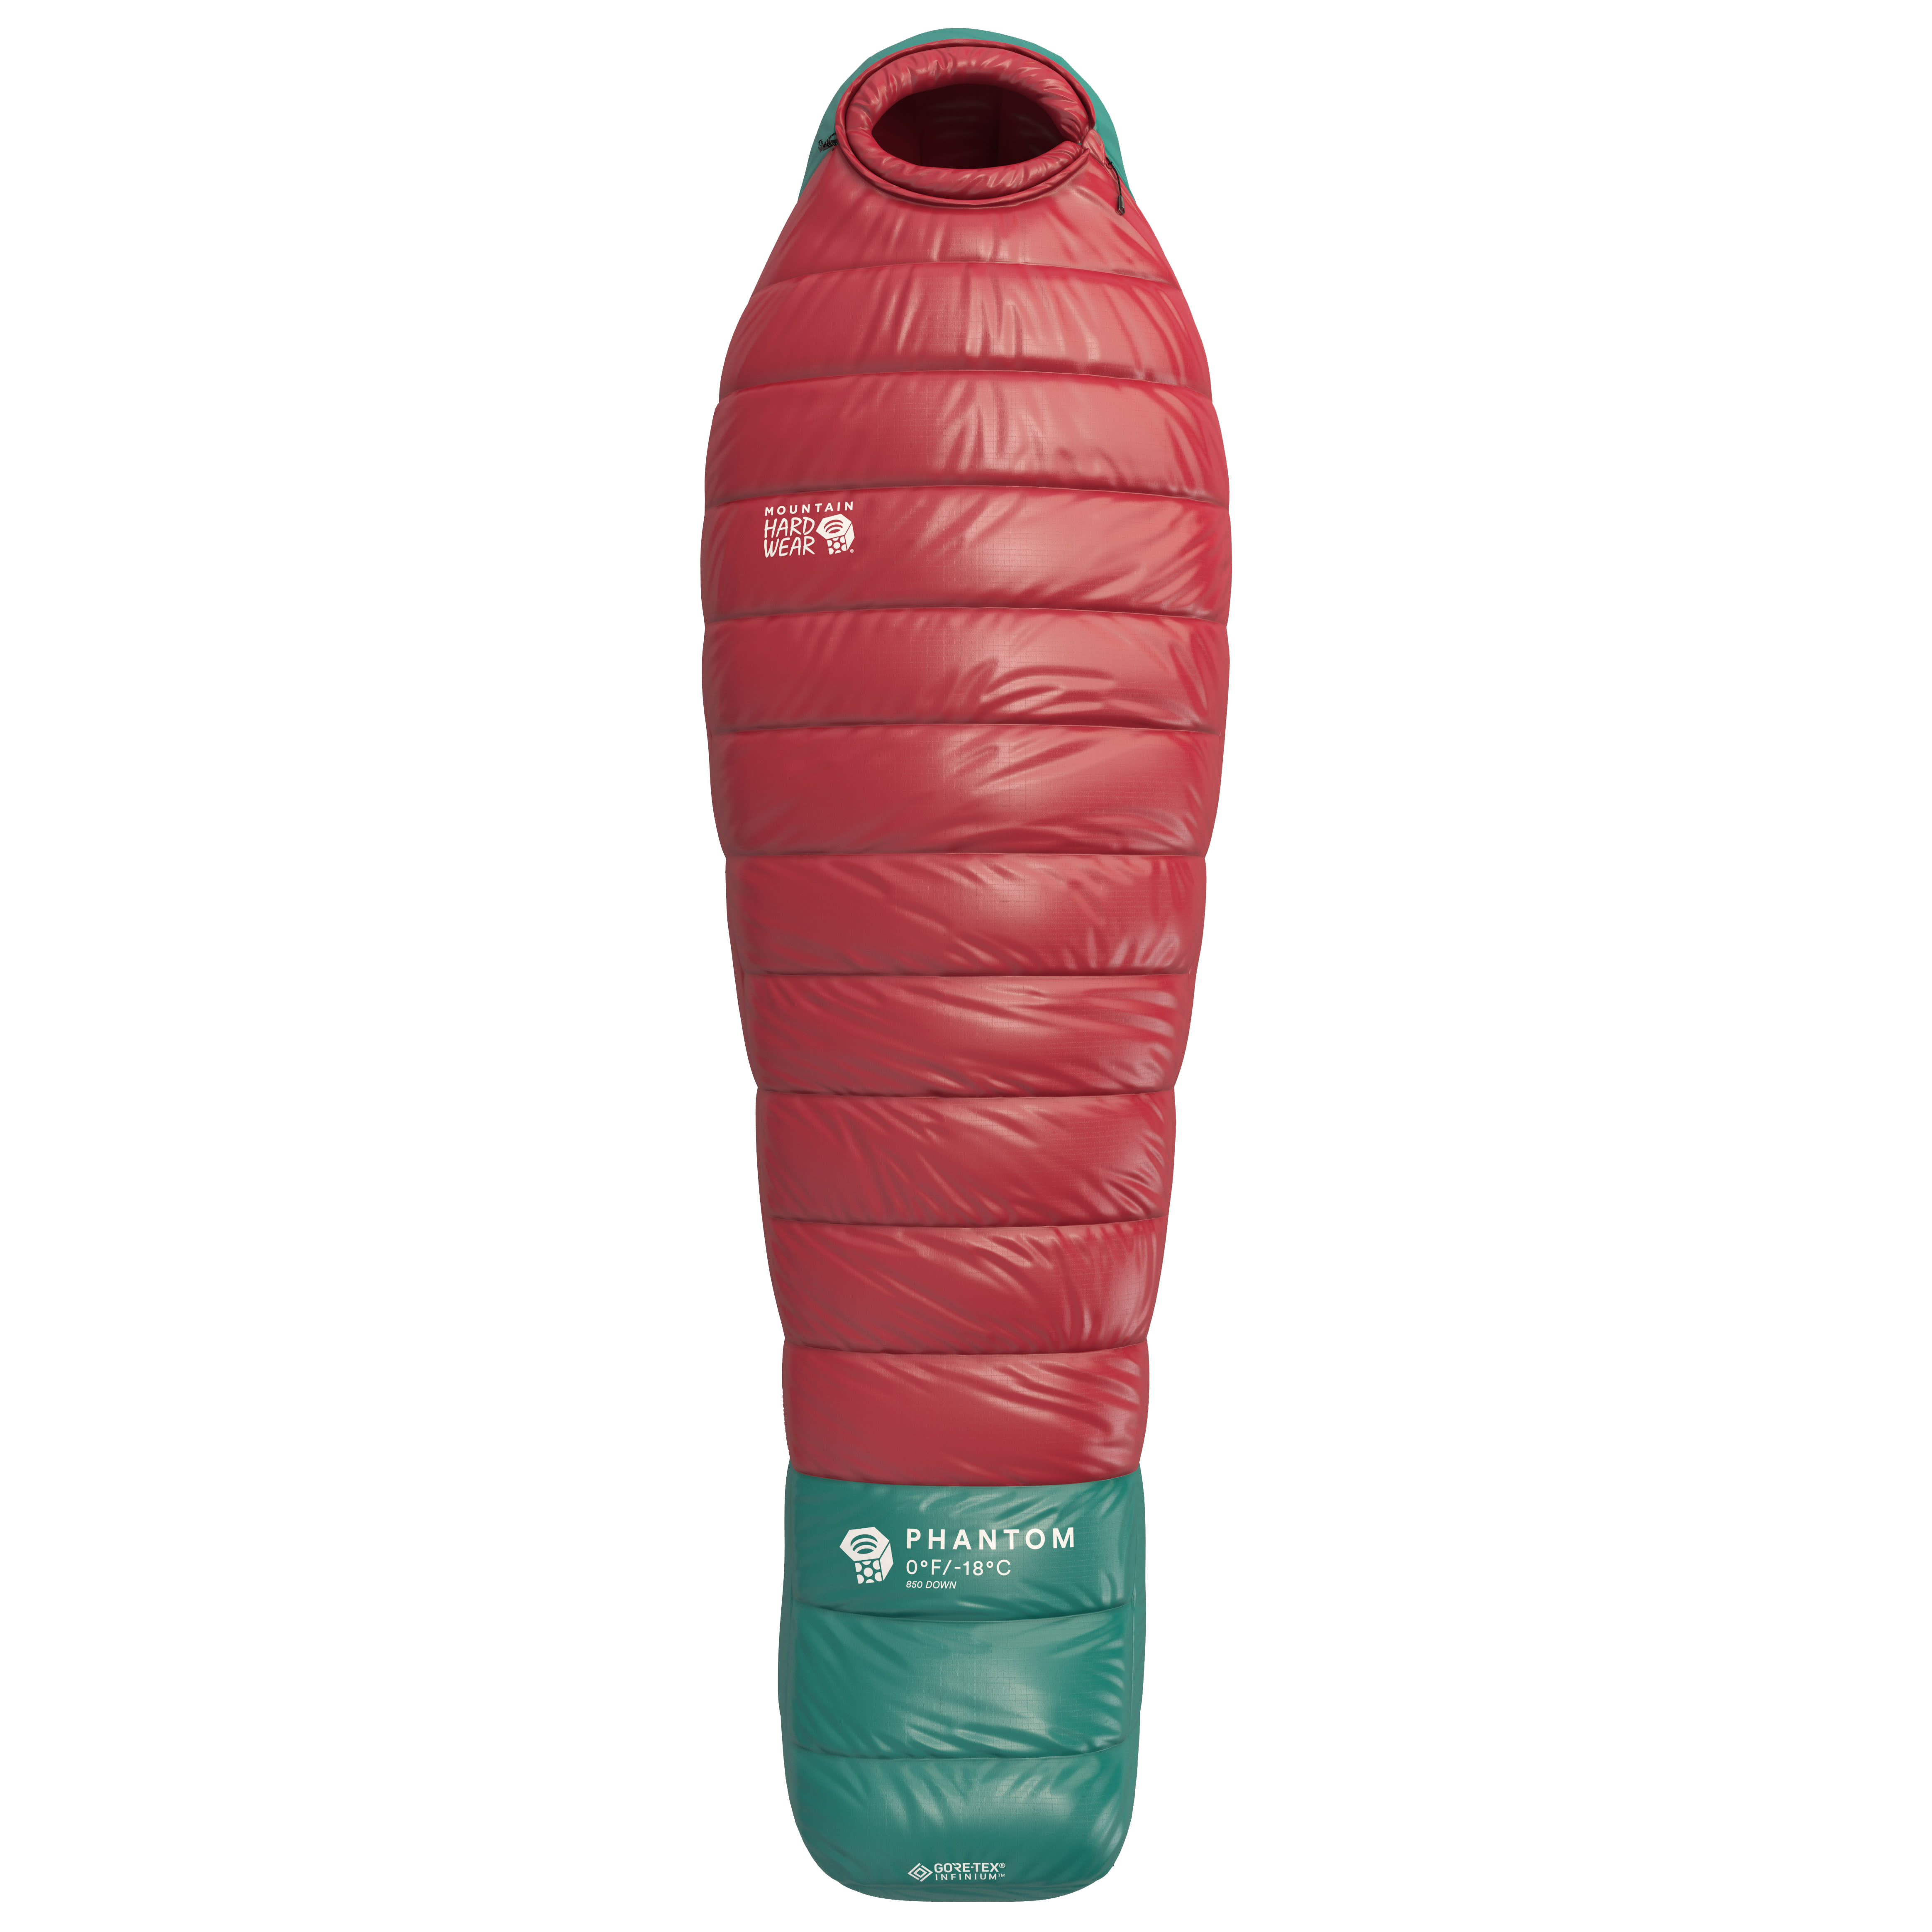 Mountain Hardwear Phantom GORE-TEX -40C - Down sleeping bag | Buy online |  Bergfreunde.eu